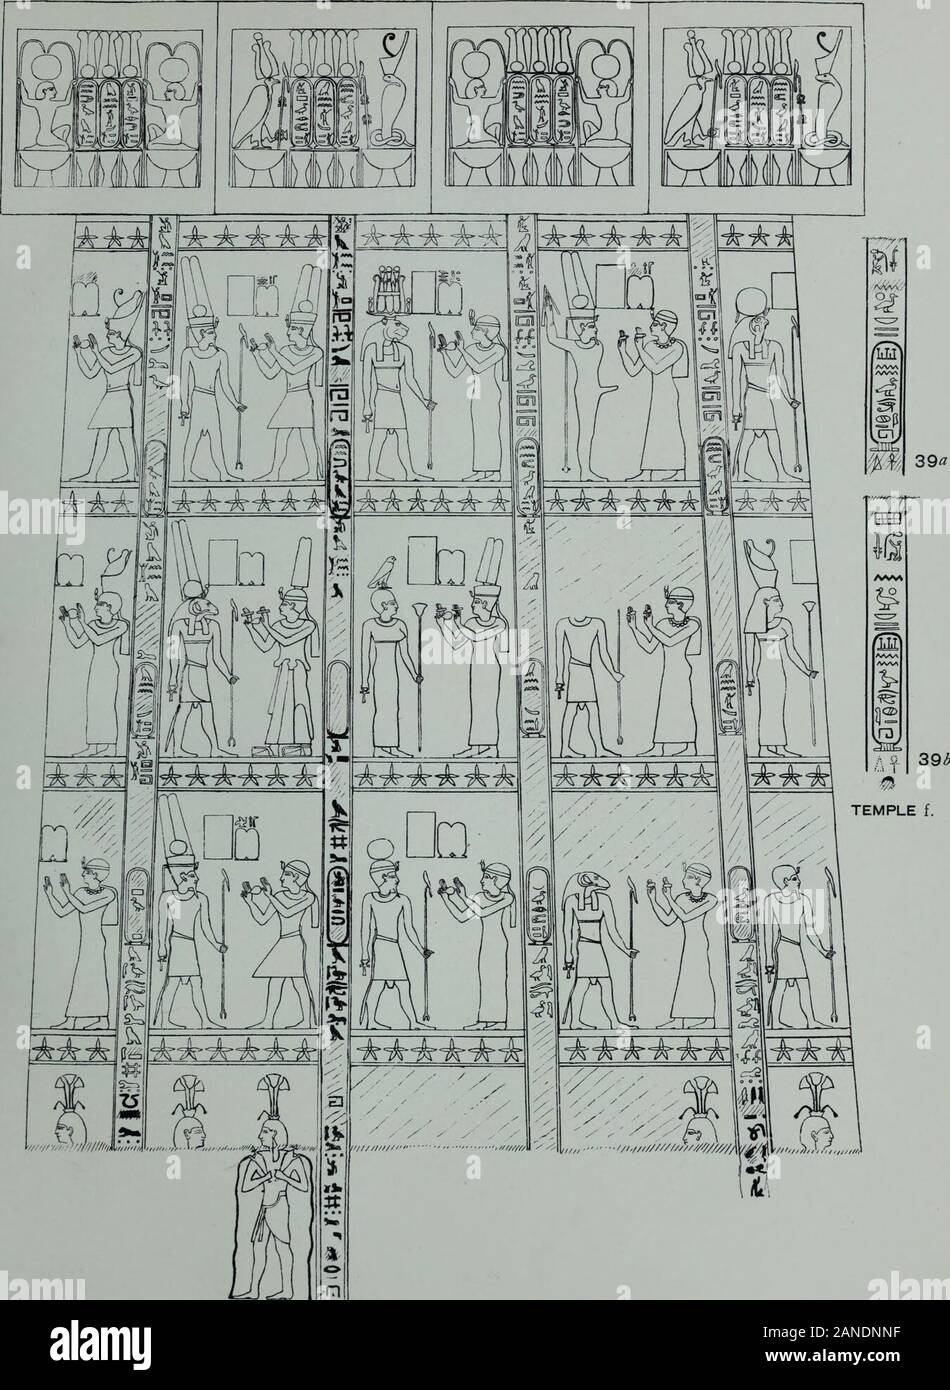 Archaeological survey of Egypt memoir . ft• • • It in 32 # y * • * n 3&gt; Vj M INSCRIPTIONS. FIRST GATEWAY, NOS. 23—32. SECOND GATEWAY, NOS. 35- 36- THIRD GATEWAY, NOS. 37» 38- MEROITIC INSCRIPTIONS I. NAGA, AMMON TEMPLE and TEMPLE f PL. XXIII.. SCENES AND INSCRIPTIONS ON COLUMN.NOS. 33. 34- XX &lt; CD&lt; z ixl00 Q&lt; CO Q. DCOCO o H Occ HI Stock Photo